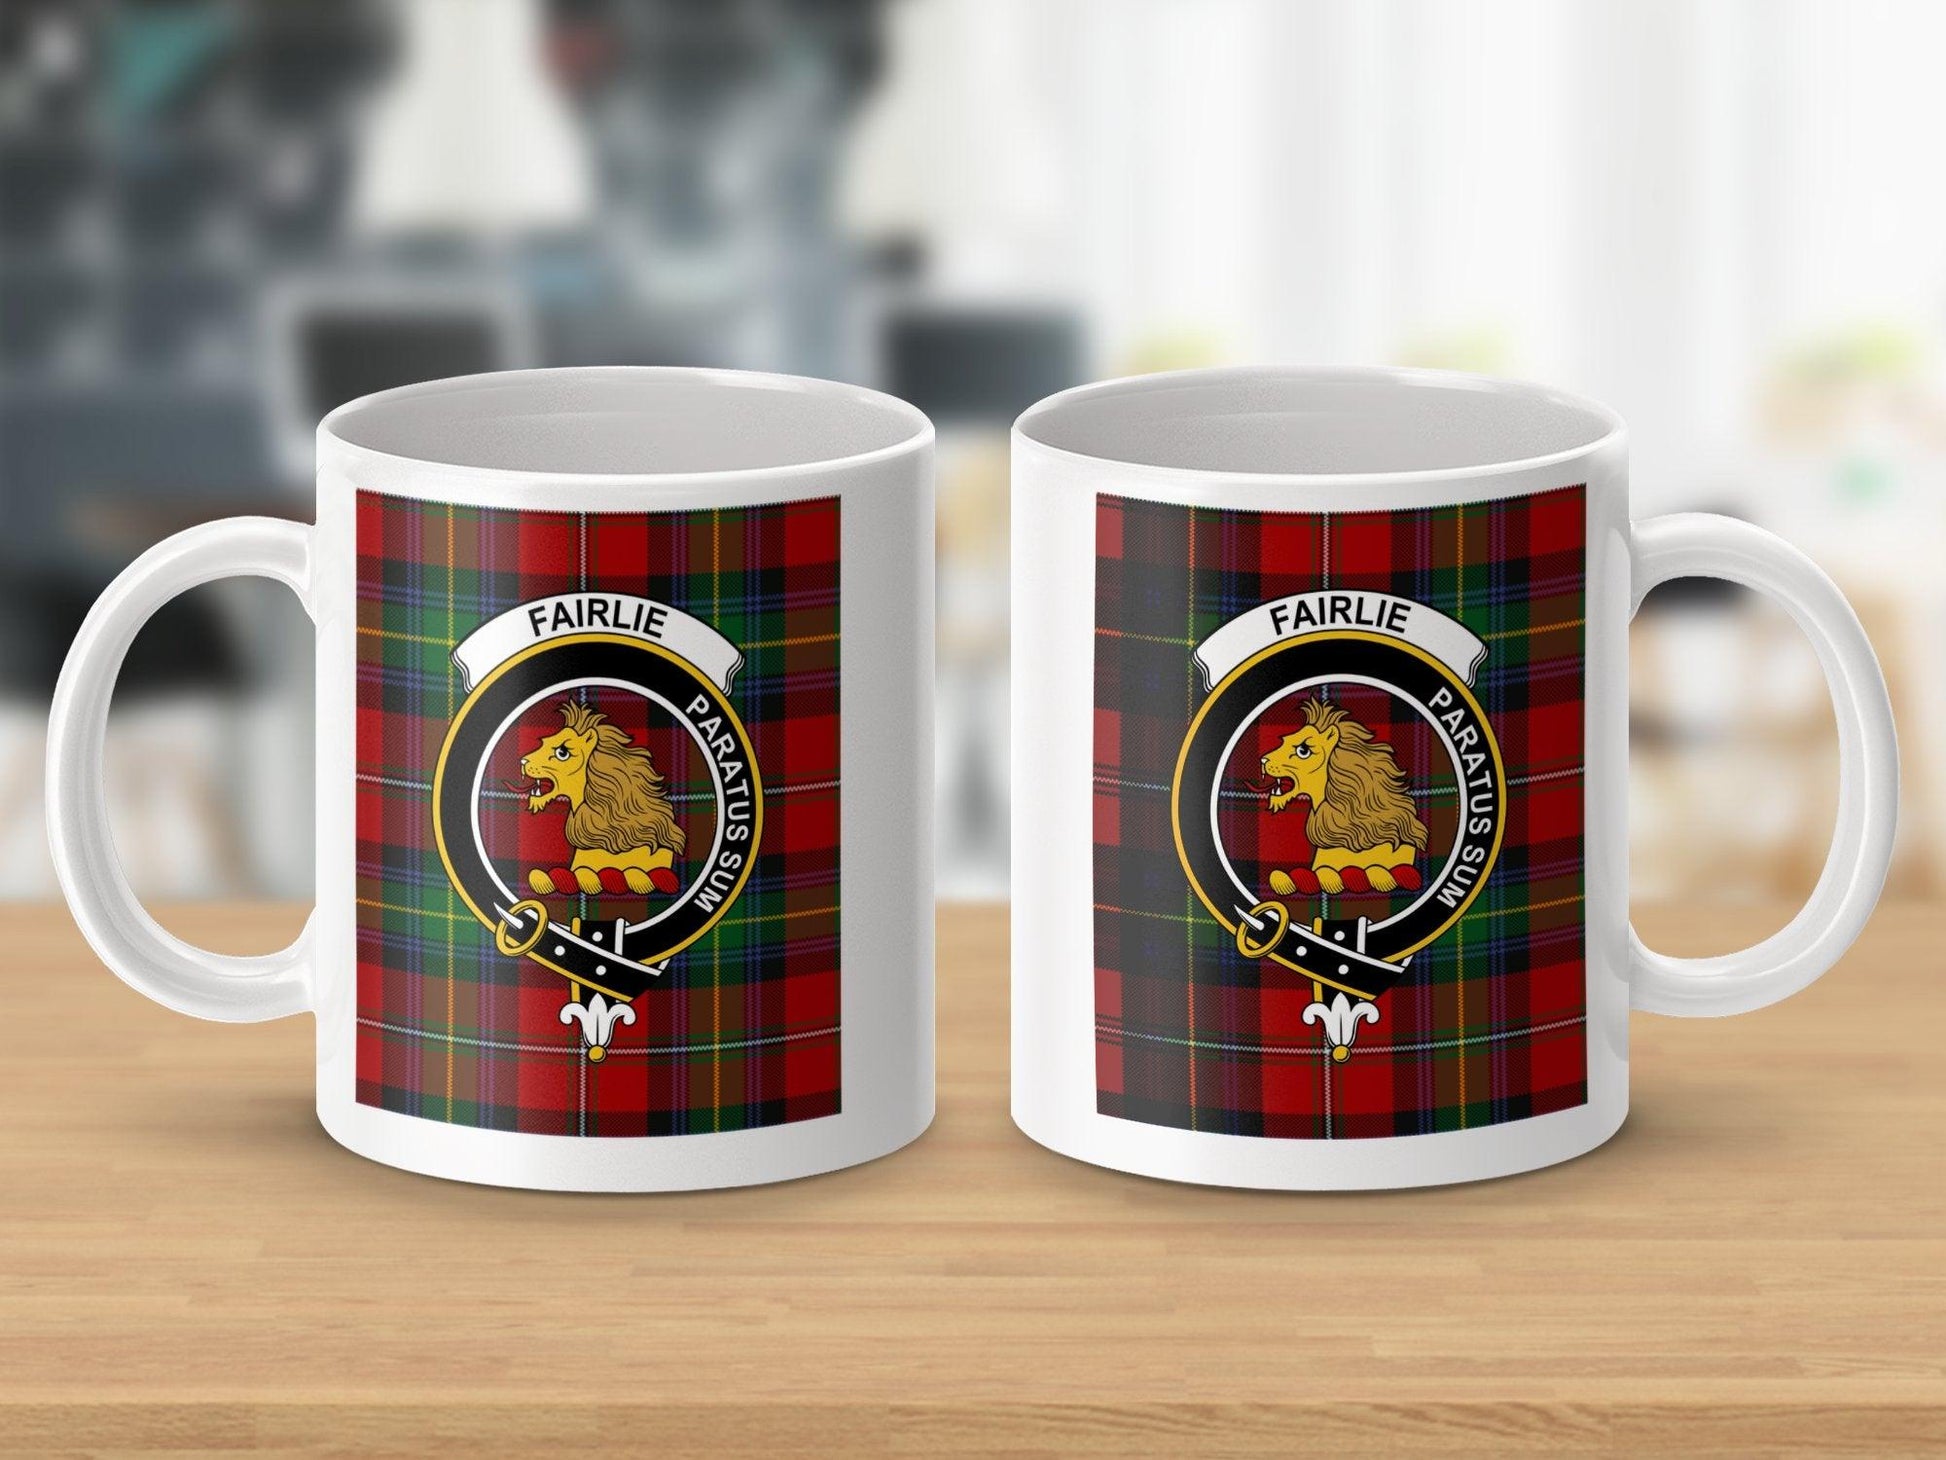 Elegant Fairlie Crest Plaid Clan Tartan Scottish Mug - Living Stone Gifts